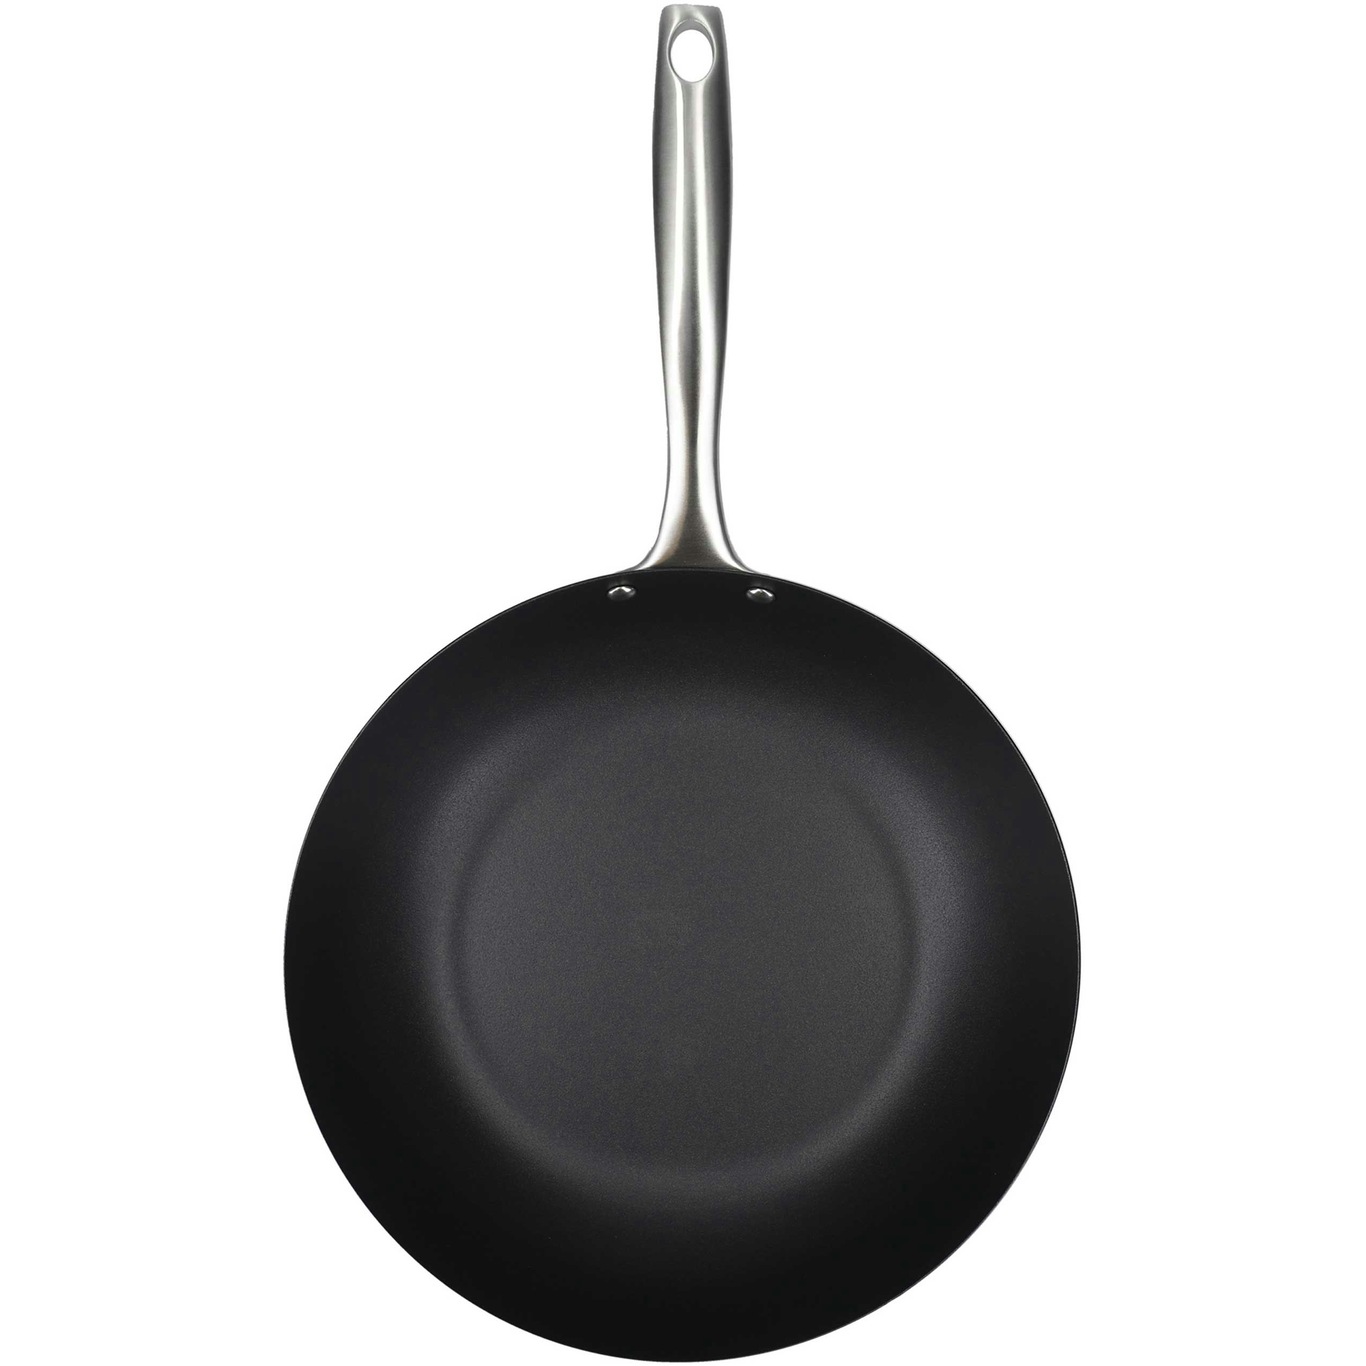 https://royaldesign.com/image/2/kitchen-craft-masterclass-induction-ready-non-stick-wok-20cm-6?w=800&quality=80